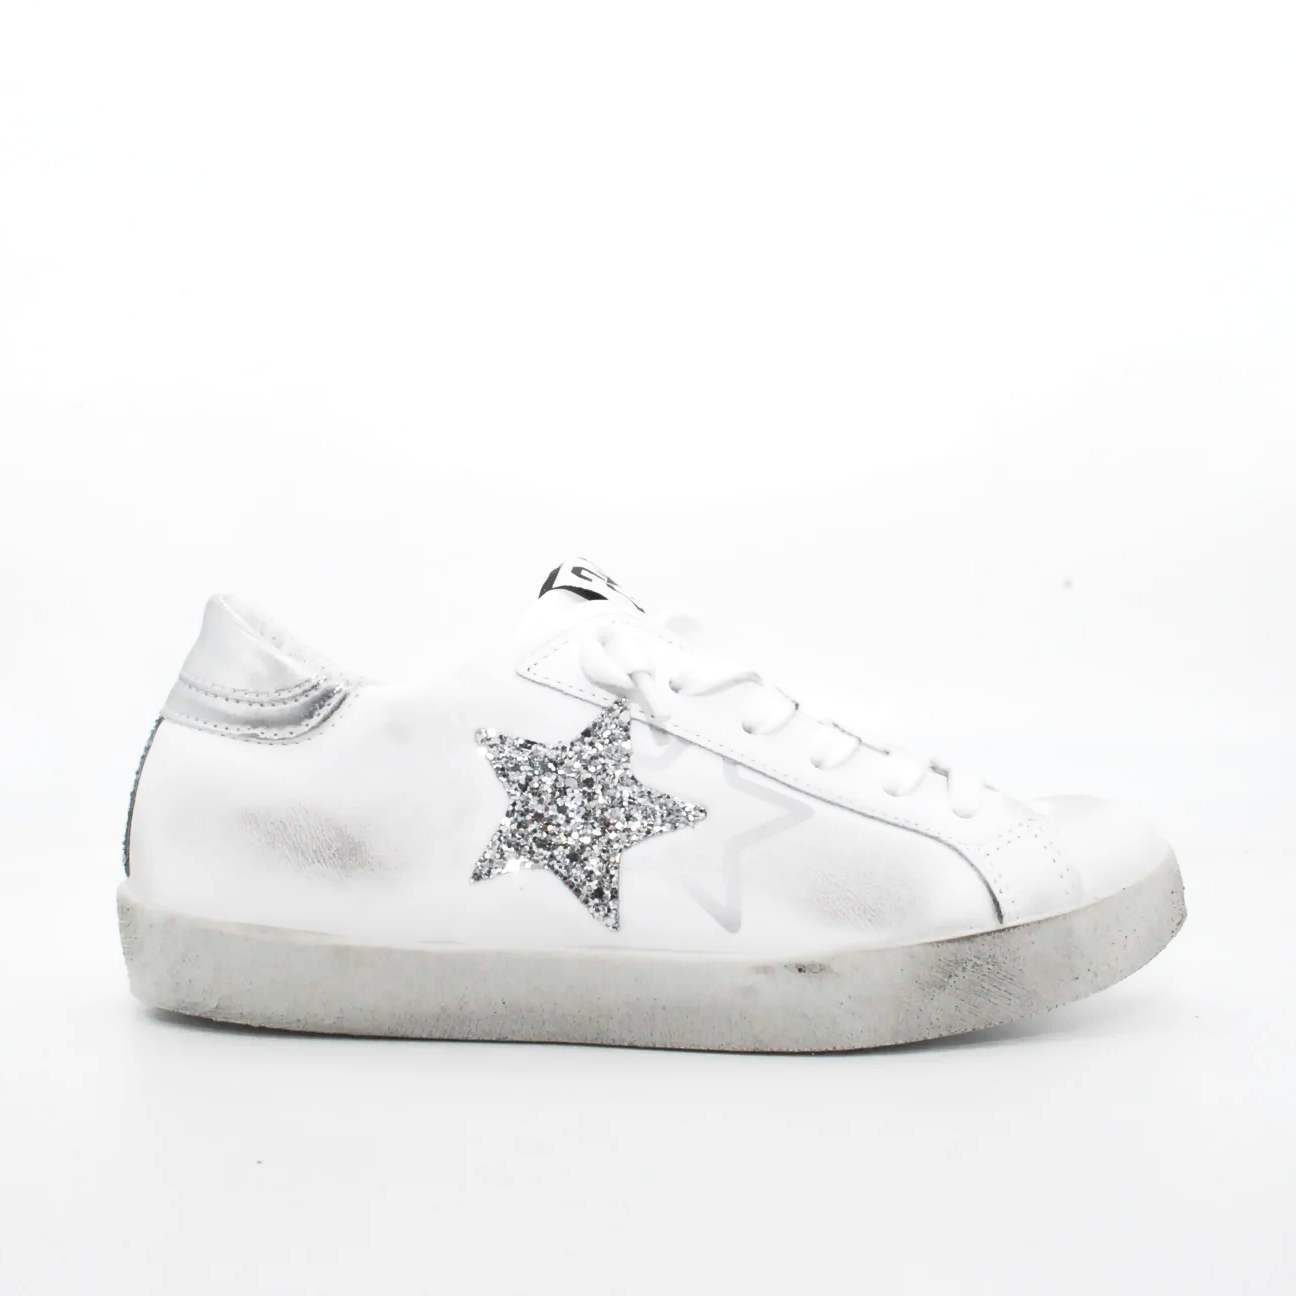 sneakers-2star-one-star-in-pelle-35-argento-pelle-sneakers.png